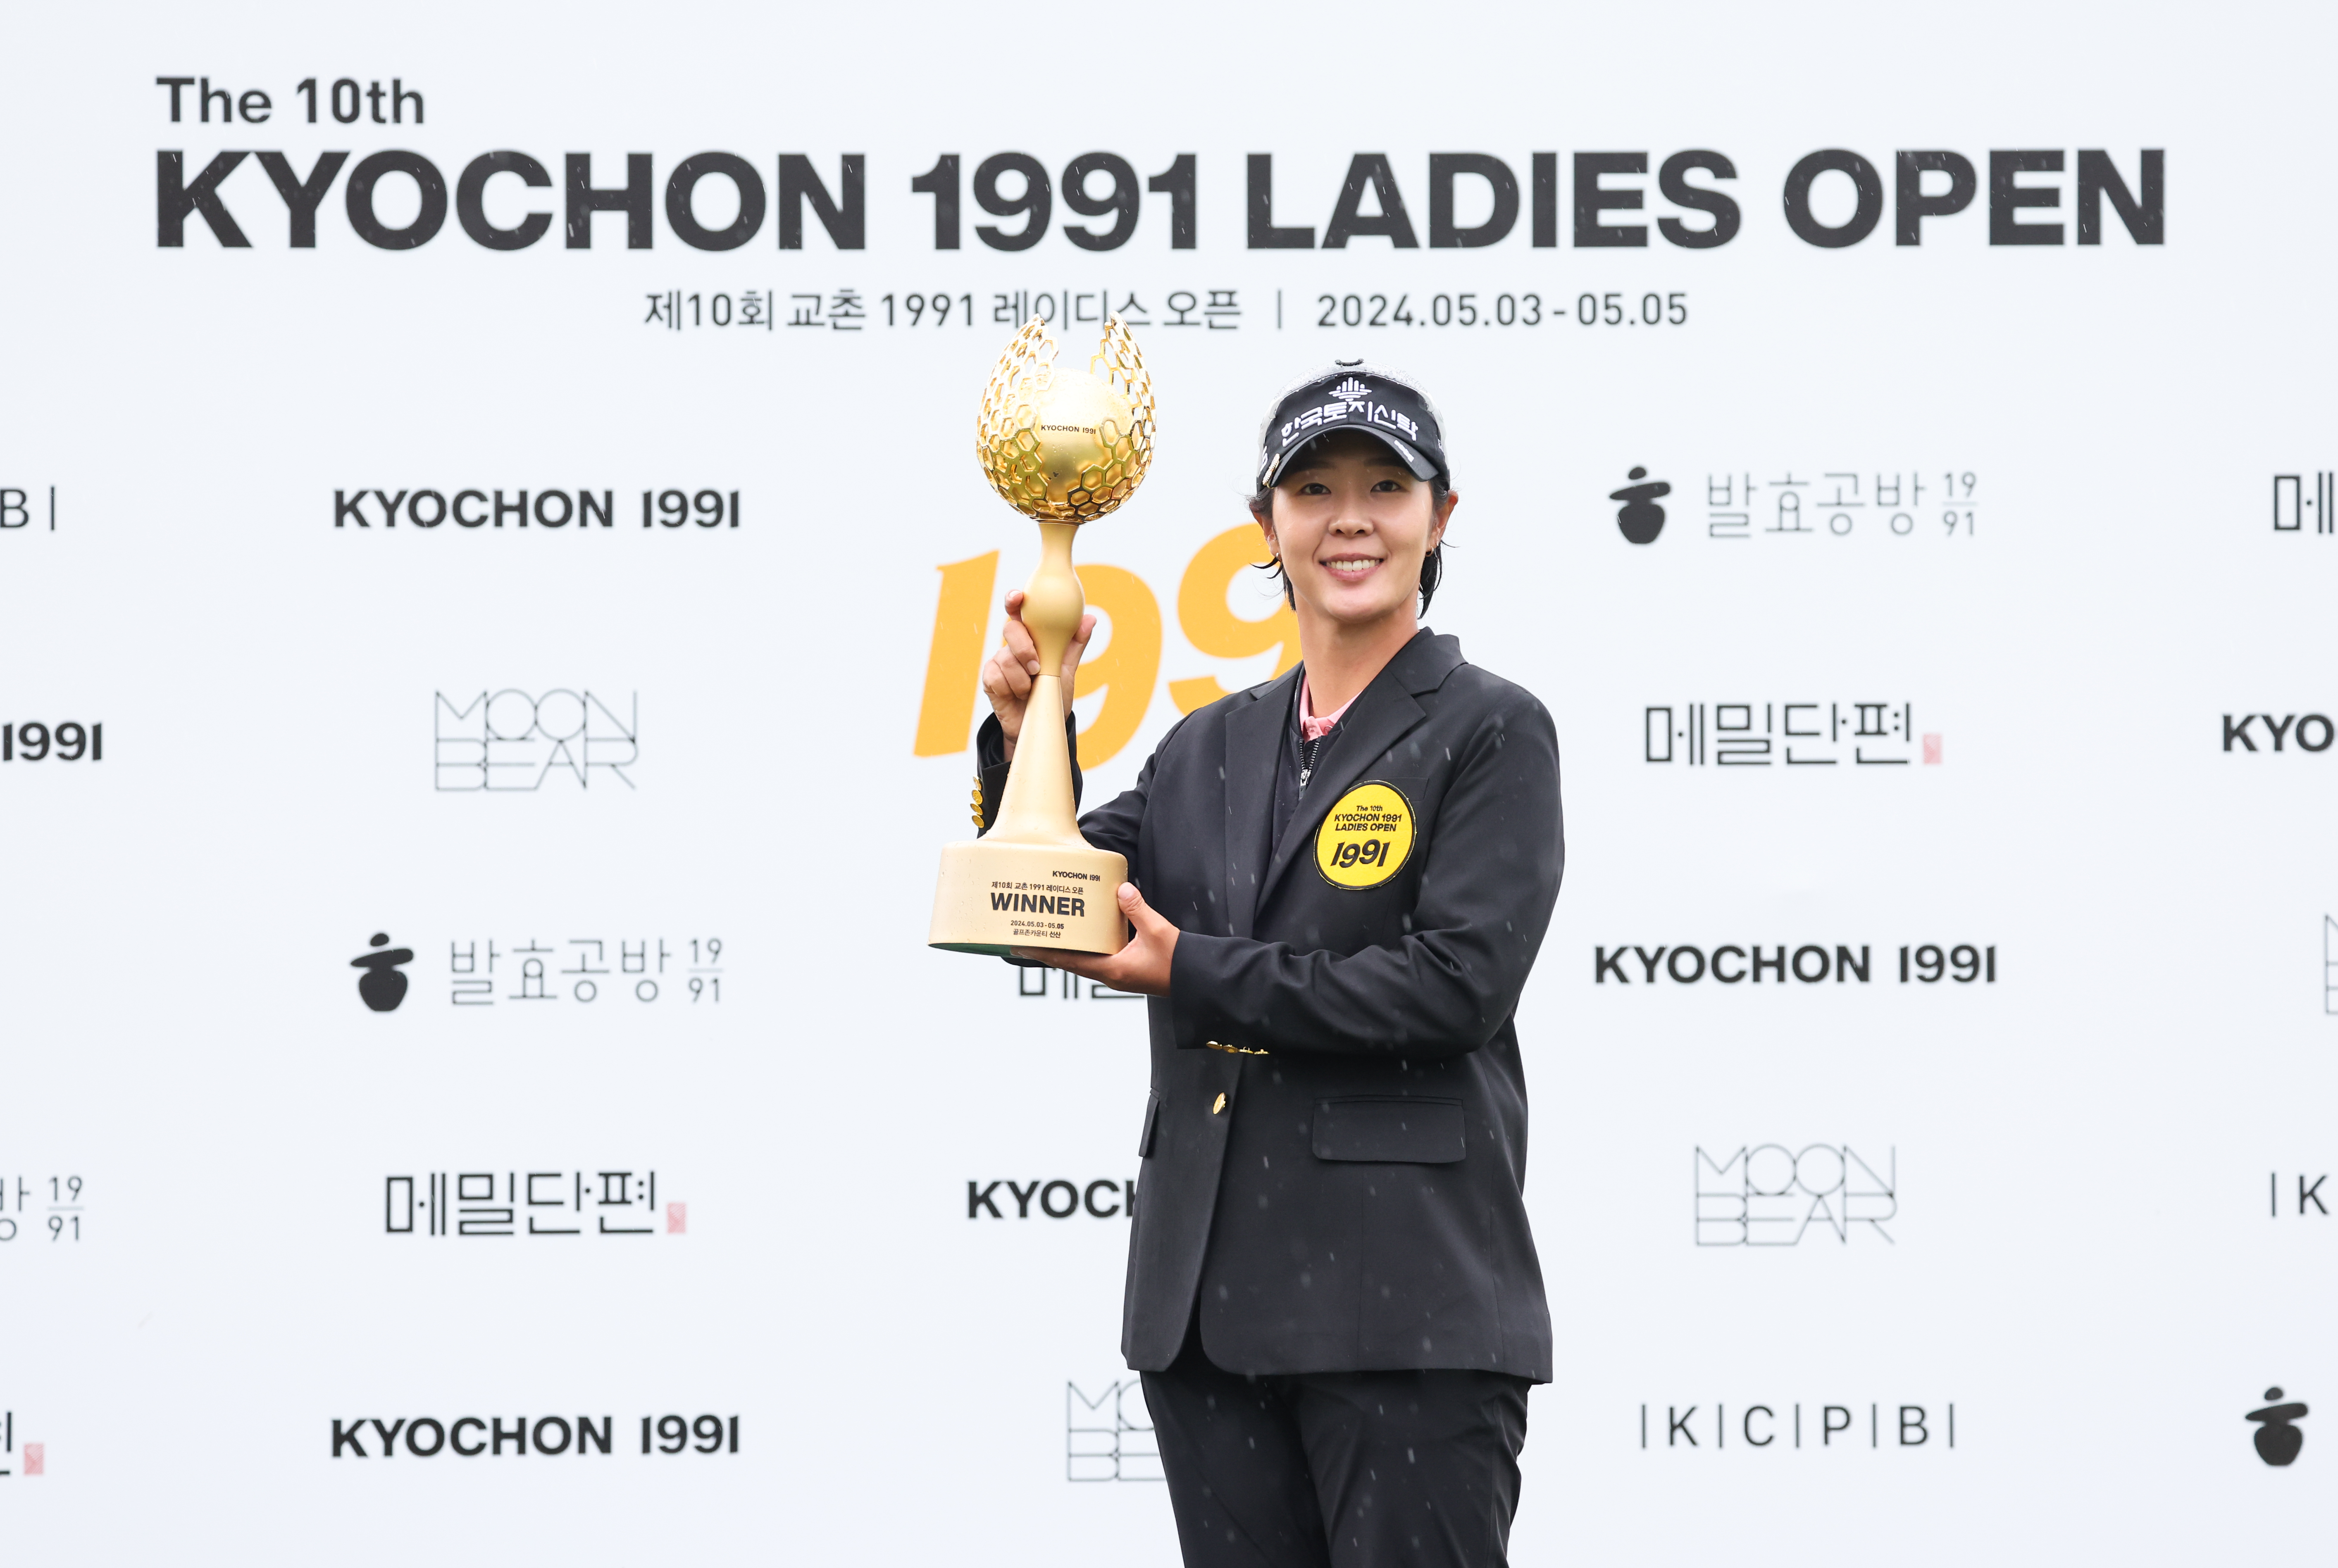 The winner of 10th Kyochon 1991 Ladies Open